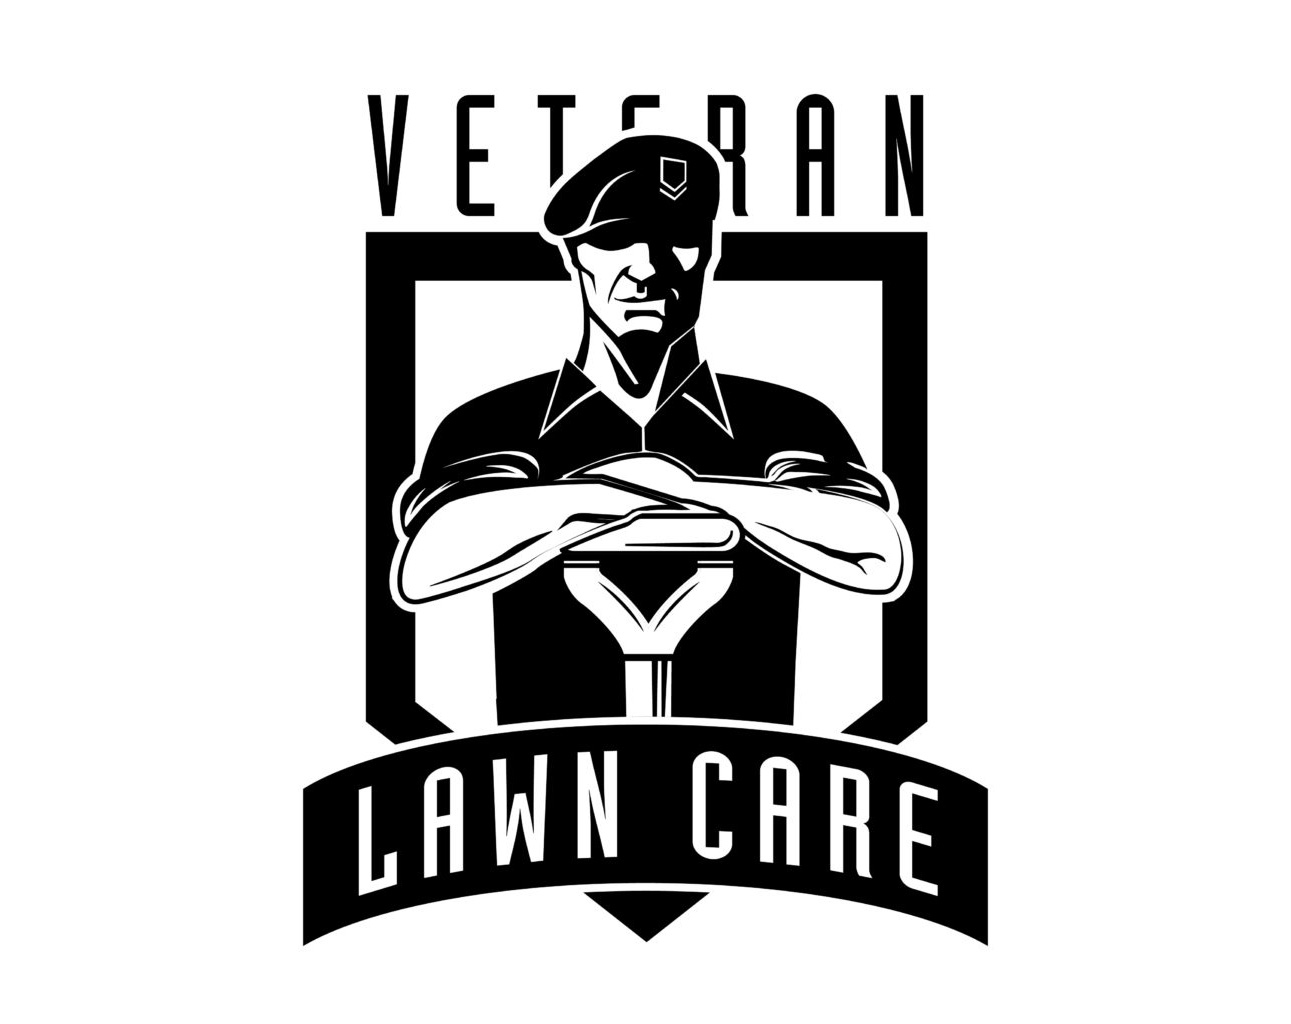 the veteran lawncare logo shows a soldier holding a shovel